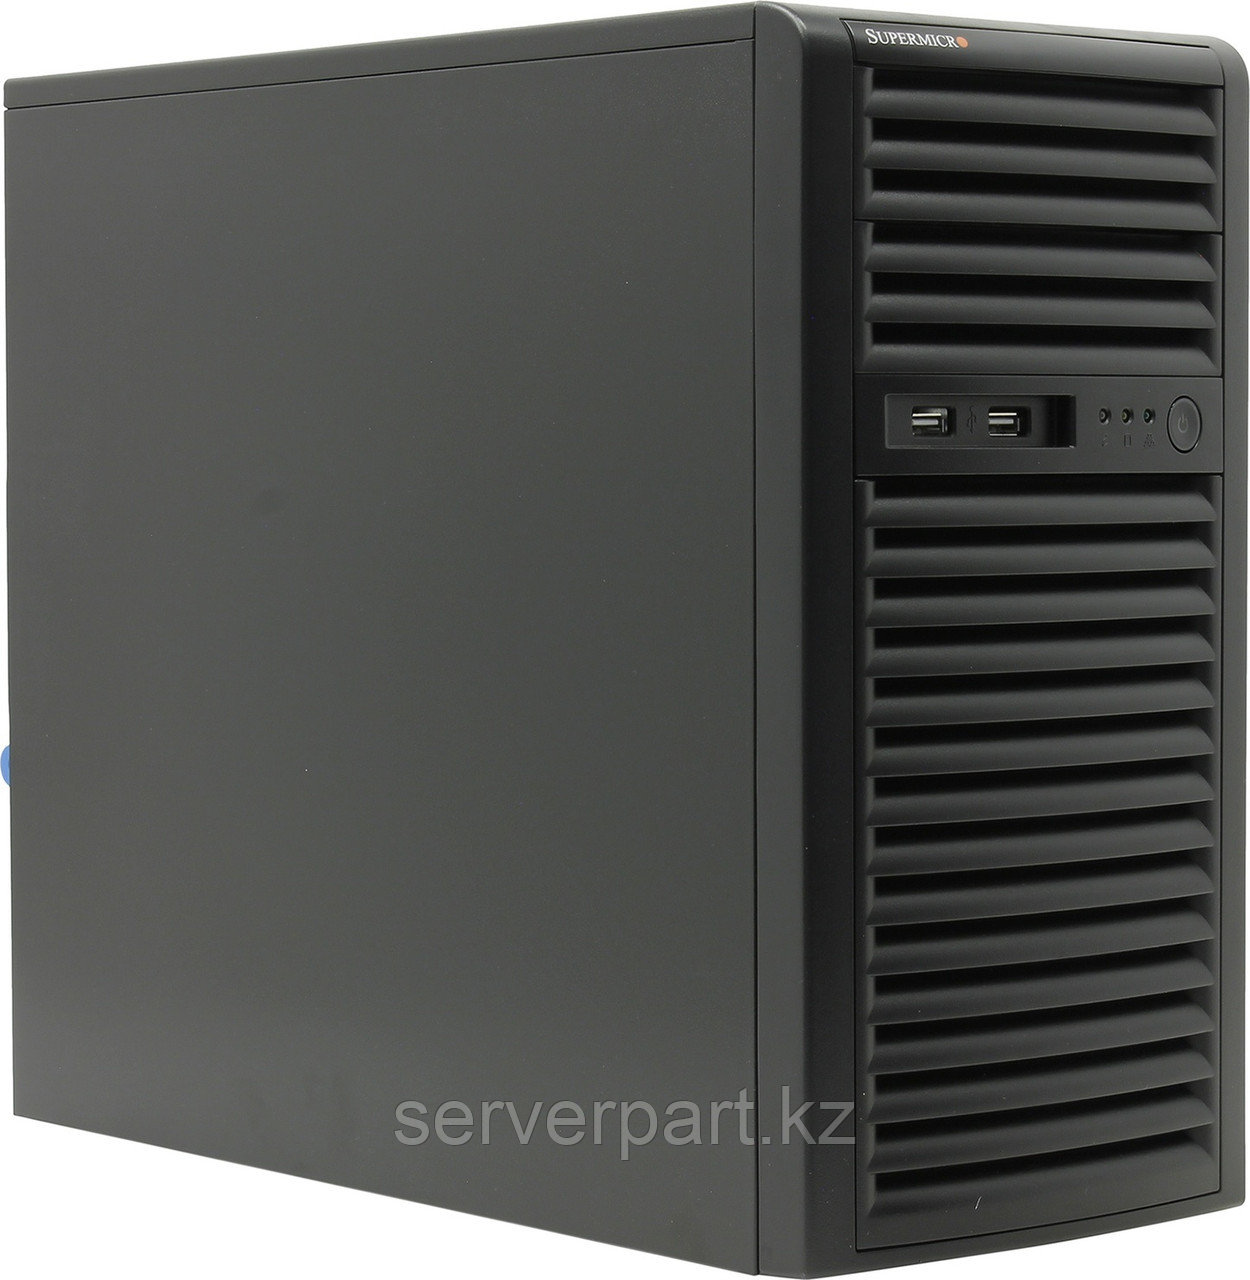 Сервер Supermicro SYS-5039D Tower 4LFF/4-core intel Xeon E3-1220v6 3GHz/24GB EUDIMM/2x480GB SSD RI Hyb, фото 1